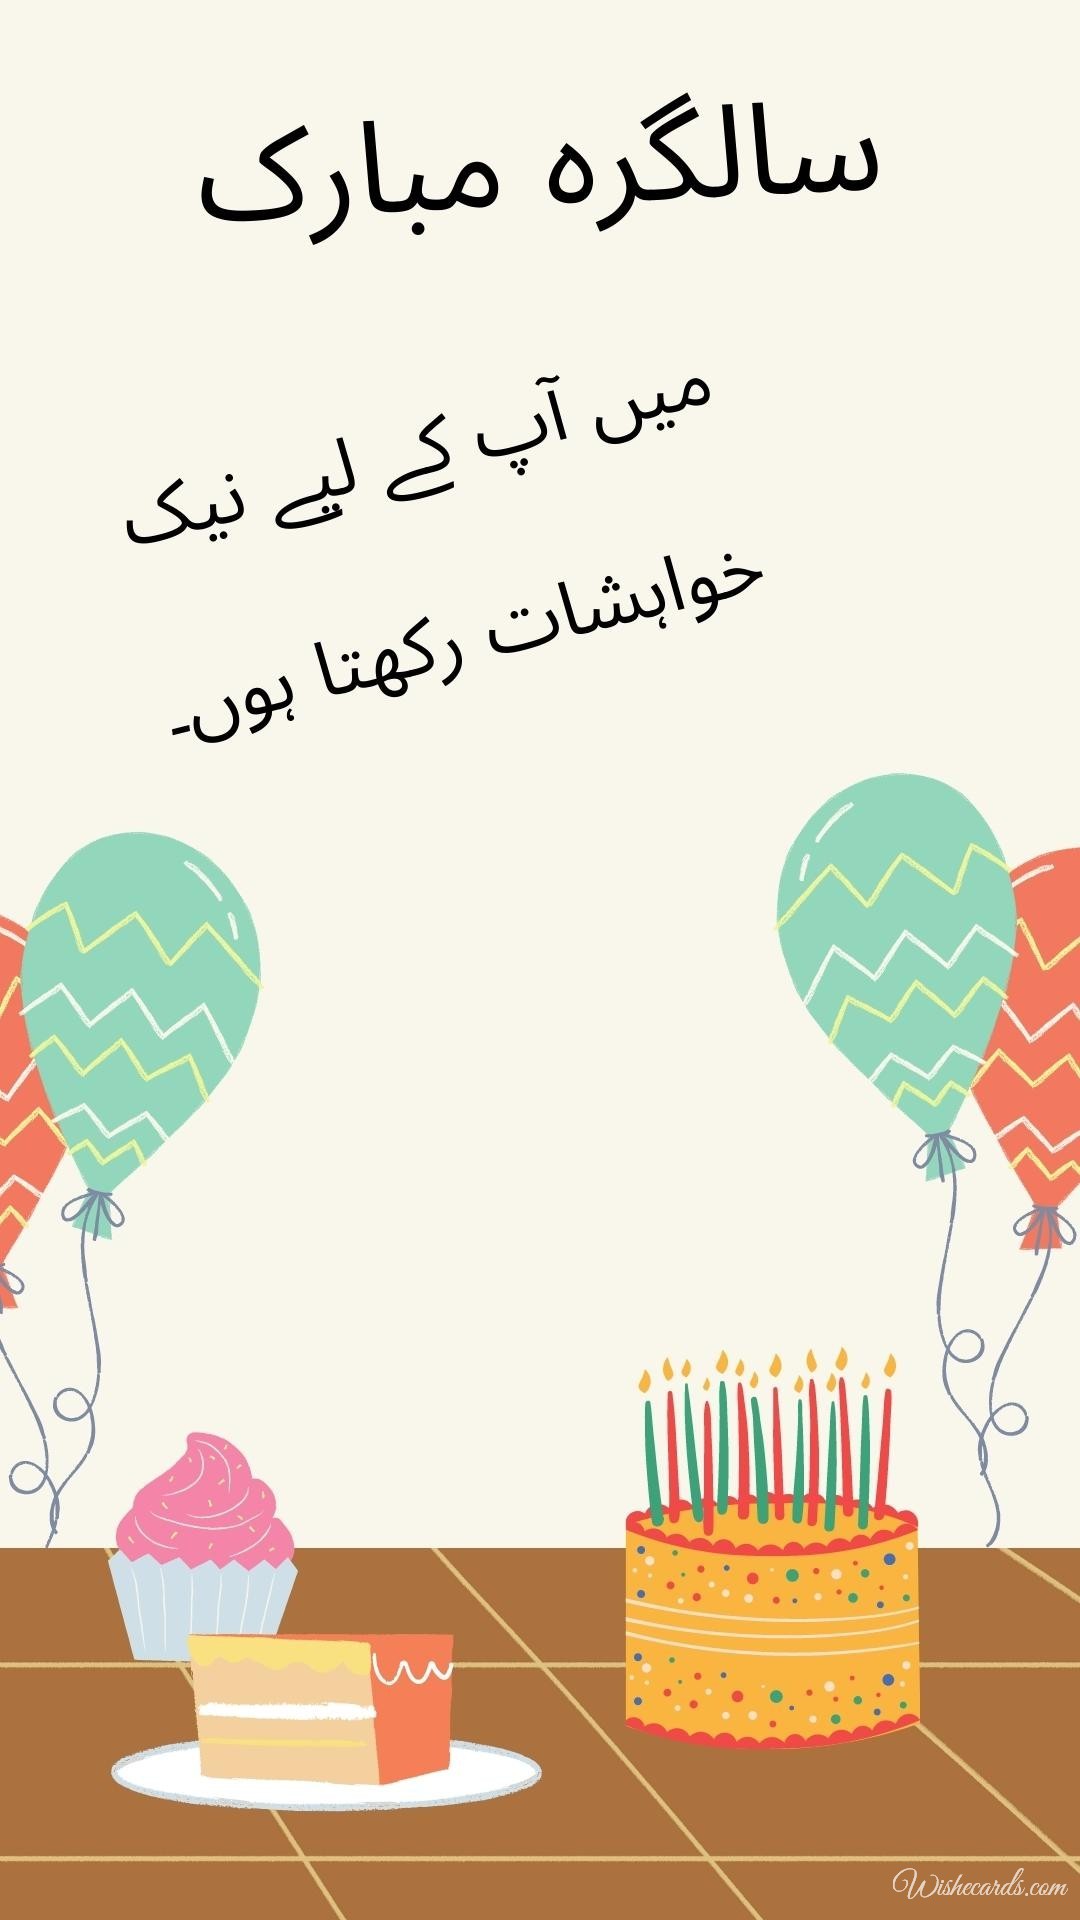 Happy Birthday Wish in Urdu Image